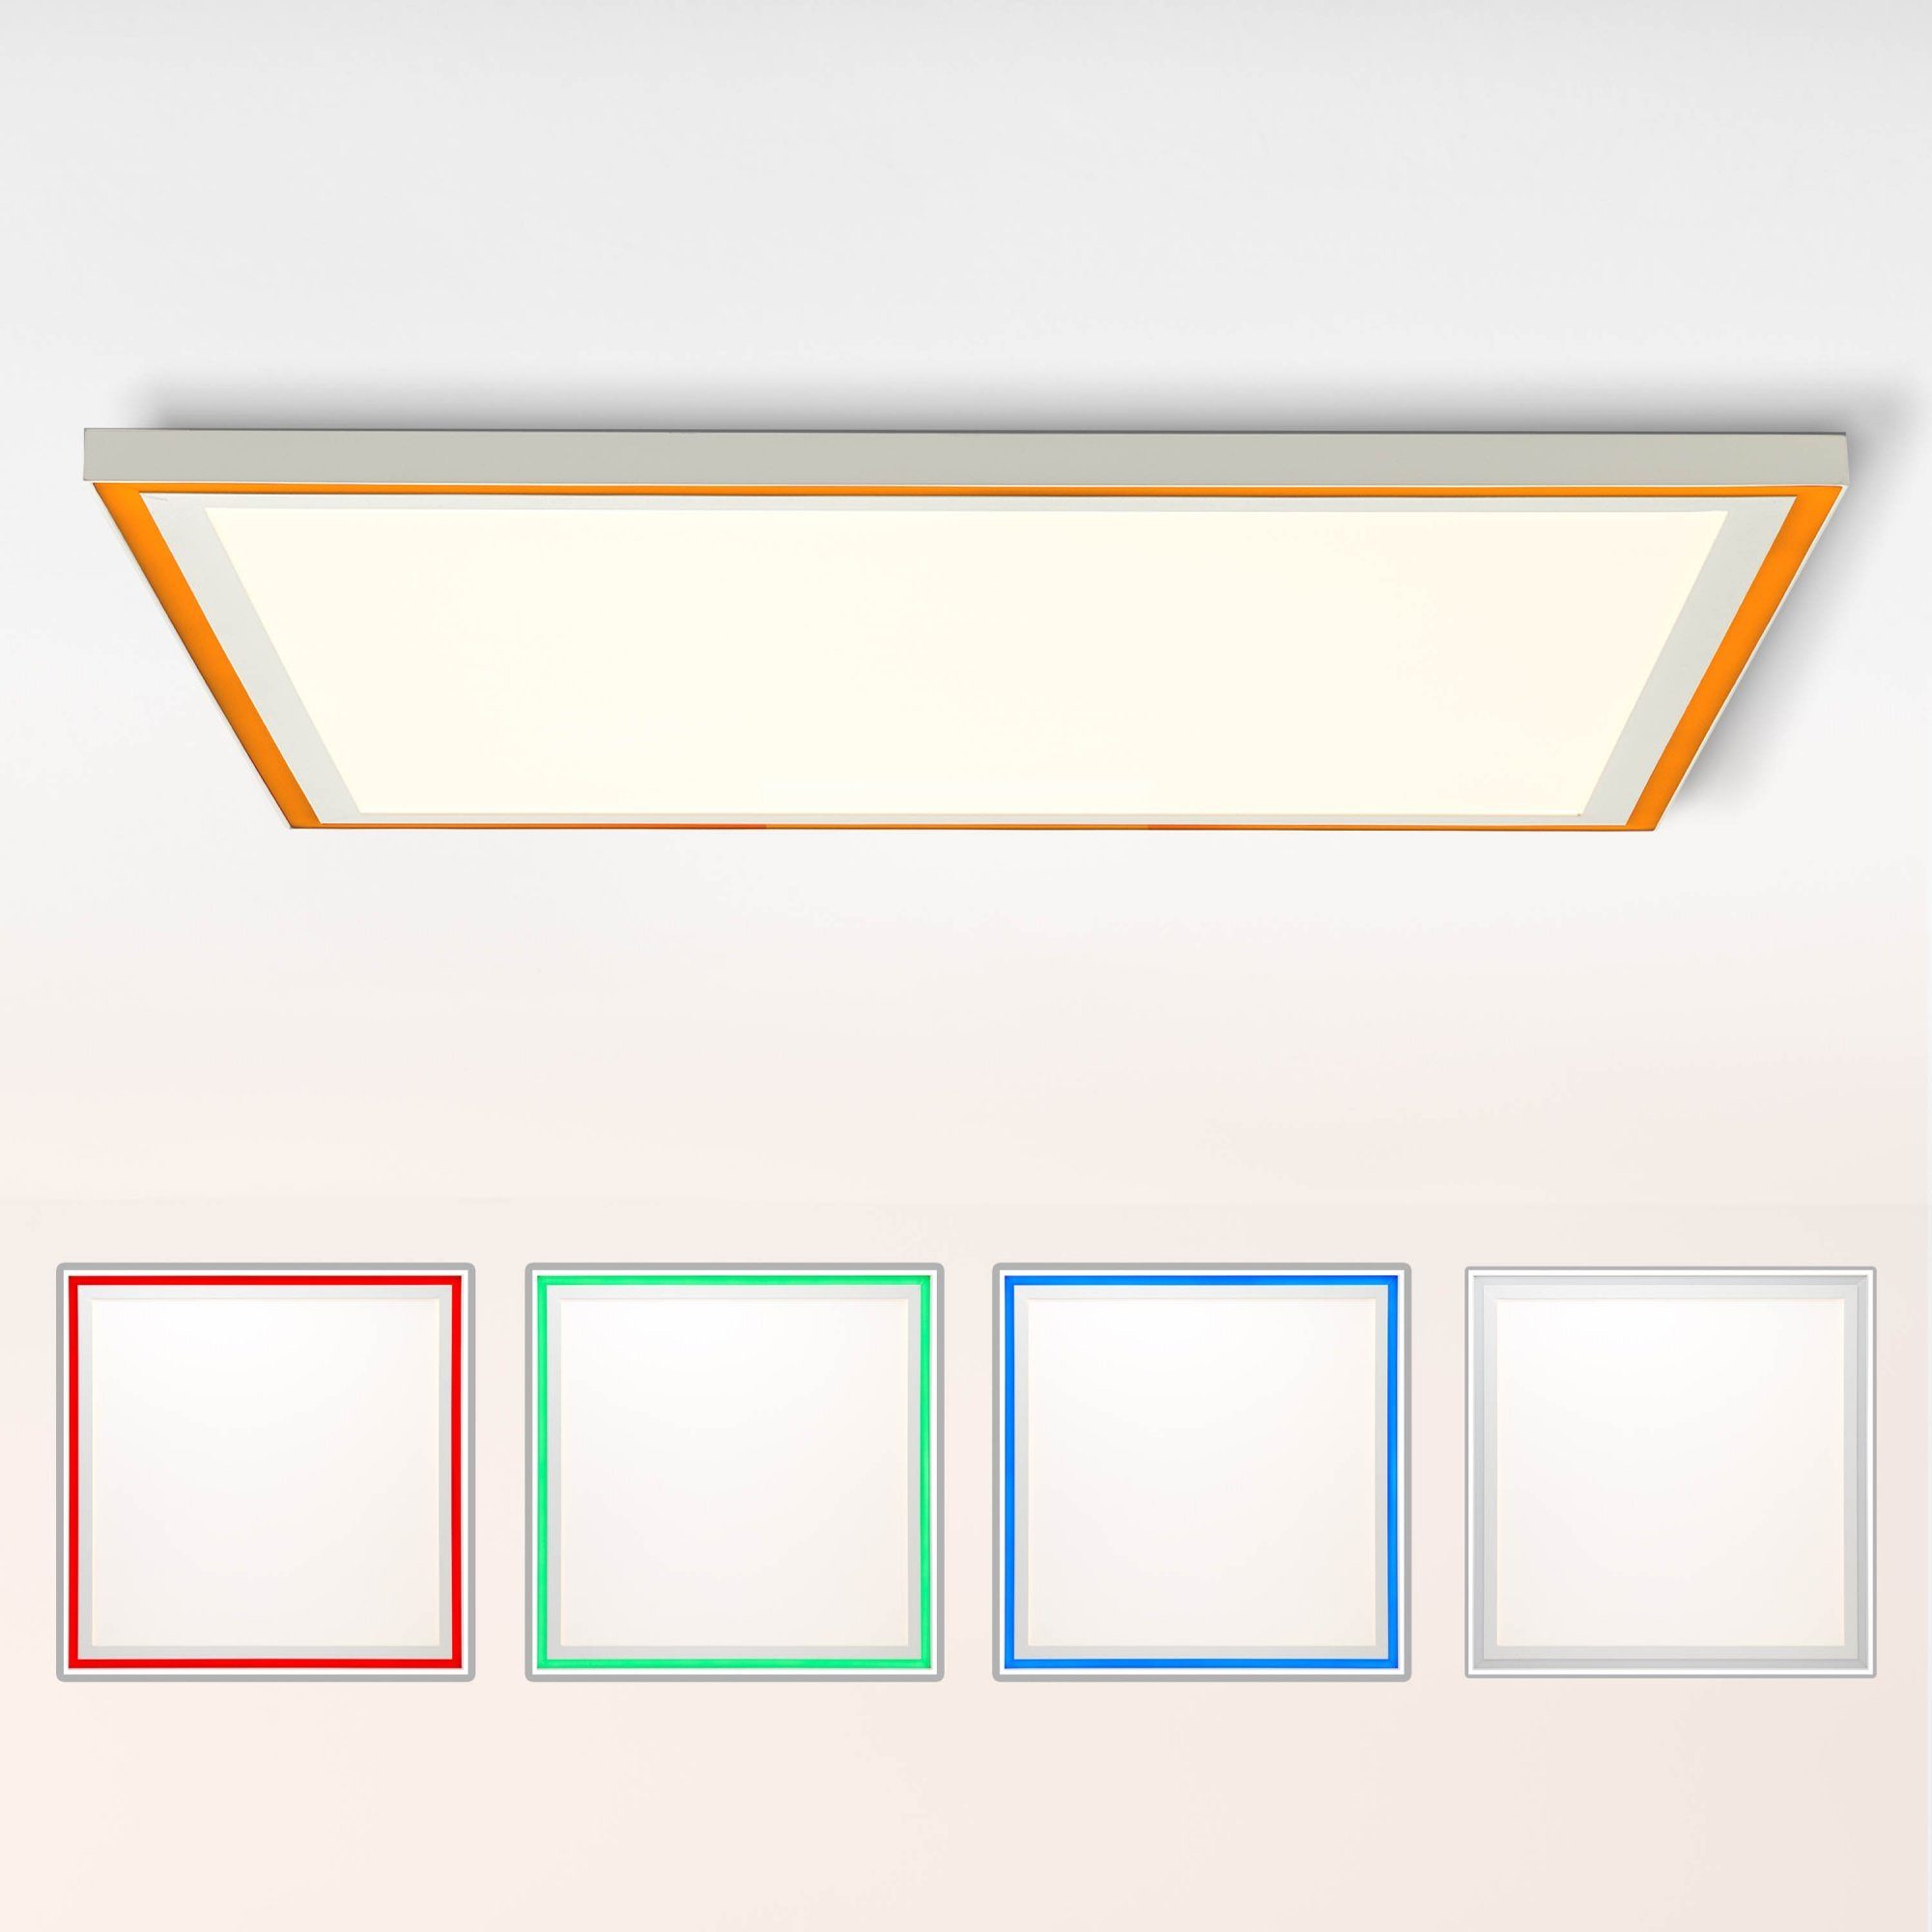 Lightbox LED Panel, CCT - über Fernbedienung, LED fest integriert, warmweiß  - kaltweiß, RGB, dimmbar, 3800 Lumen, Memory Funktion, 60x60 cm,  Metall/Kunststoff, RGB-Frame Light für farbenfrohe Akzentbeleuchtung | Panels